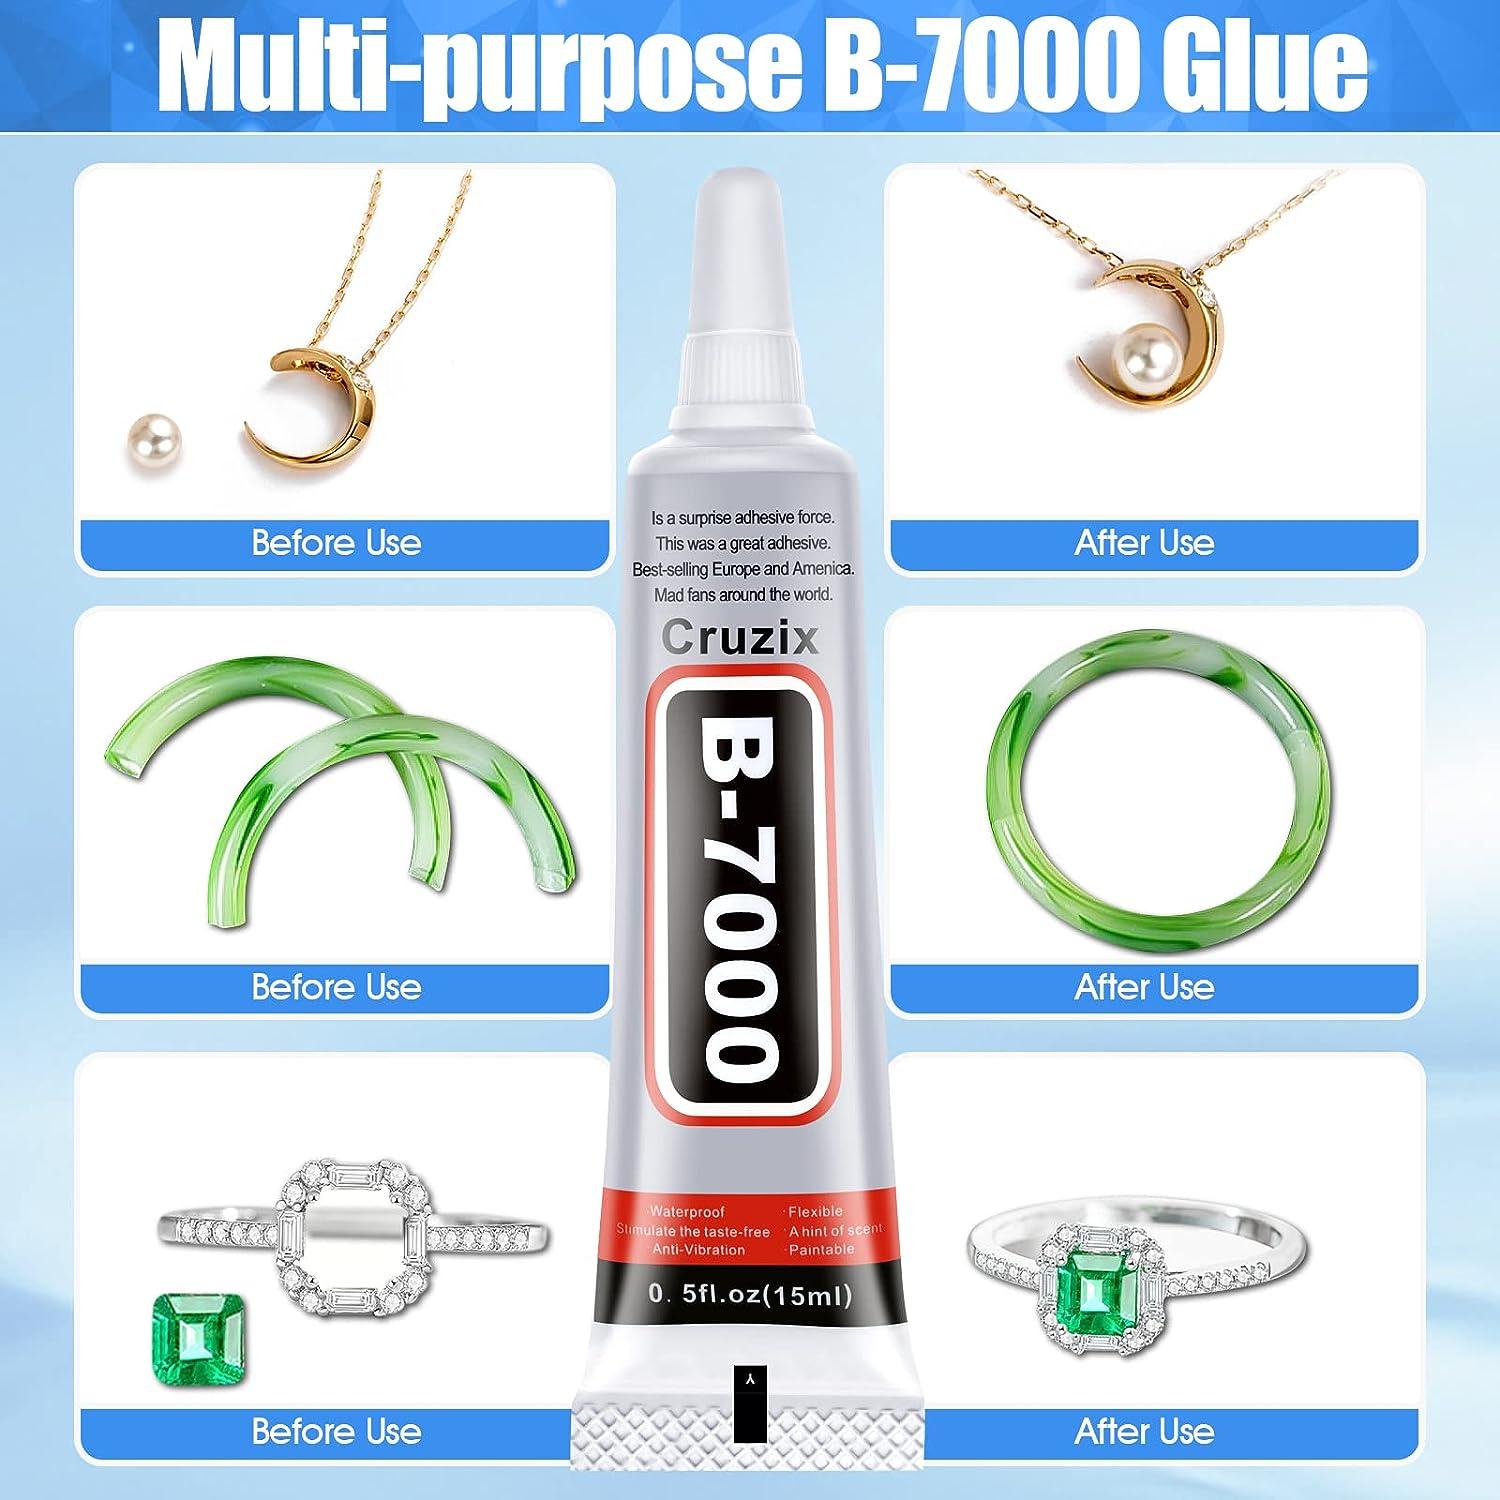 B7000 Glue Multi-purpose Adhesive Crafting Jewelry Phone Repair Wood Toys UK